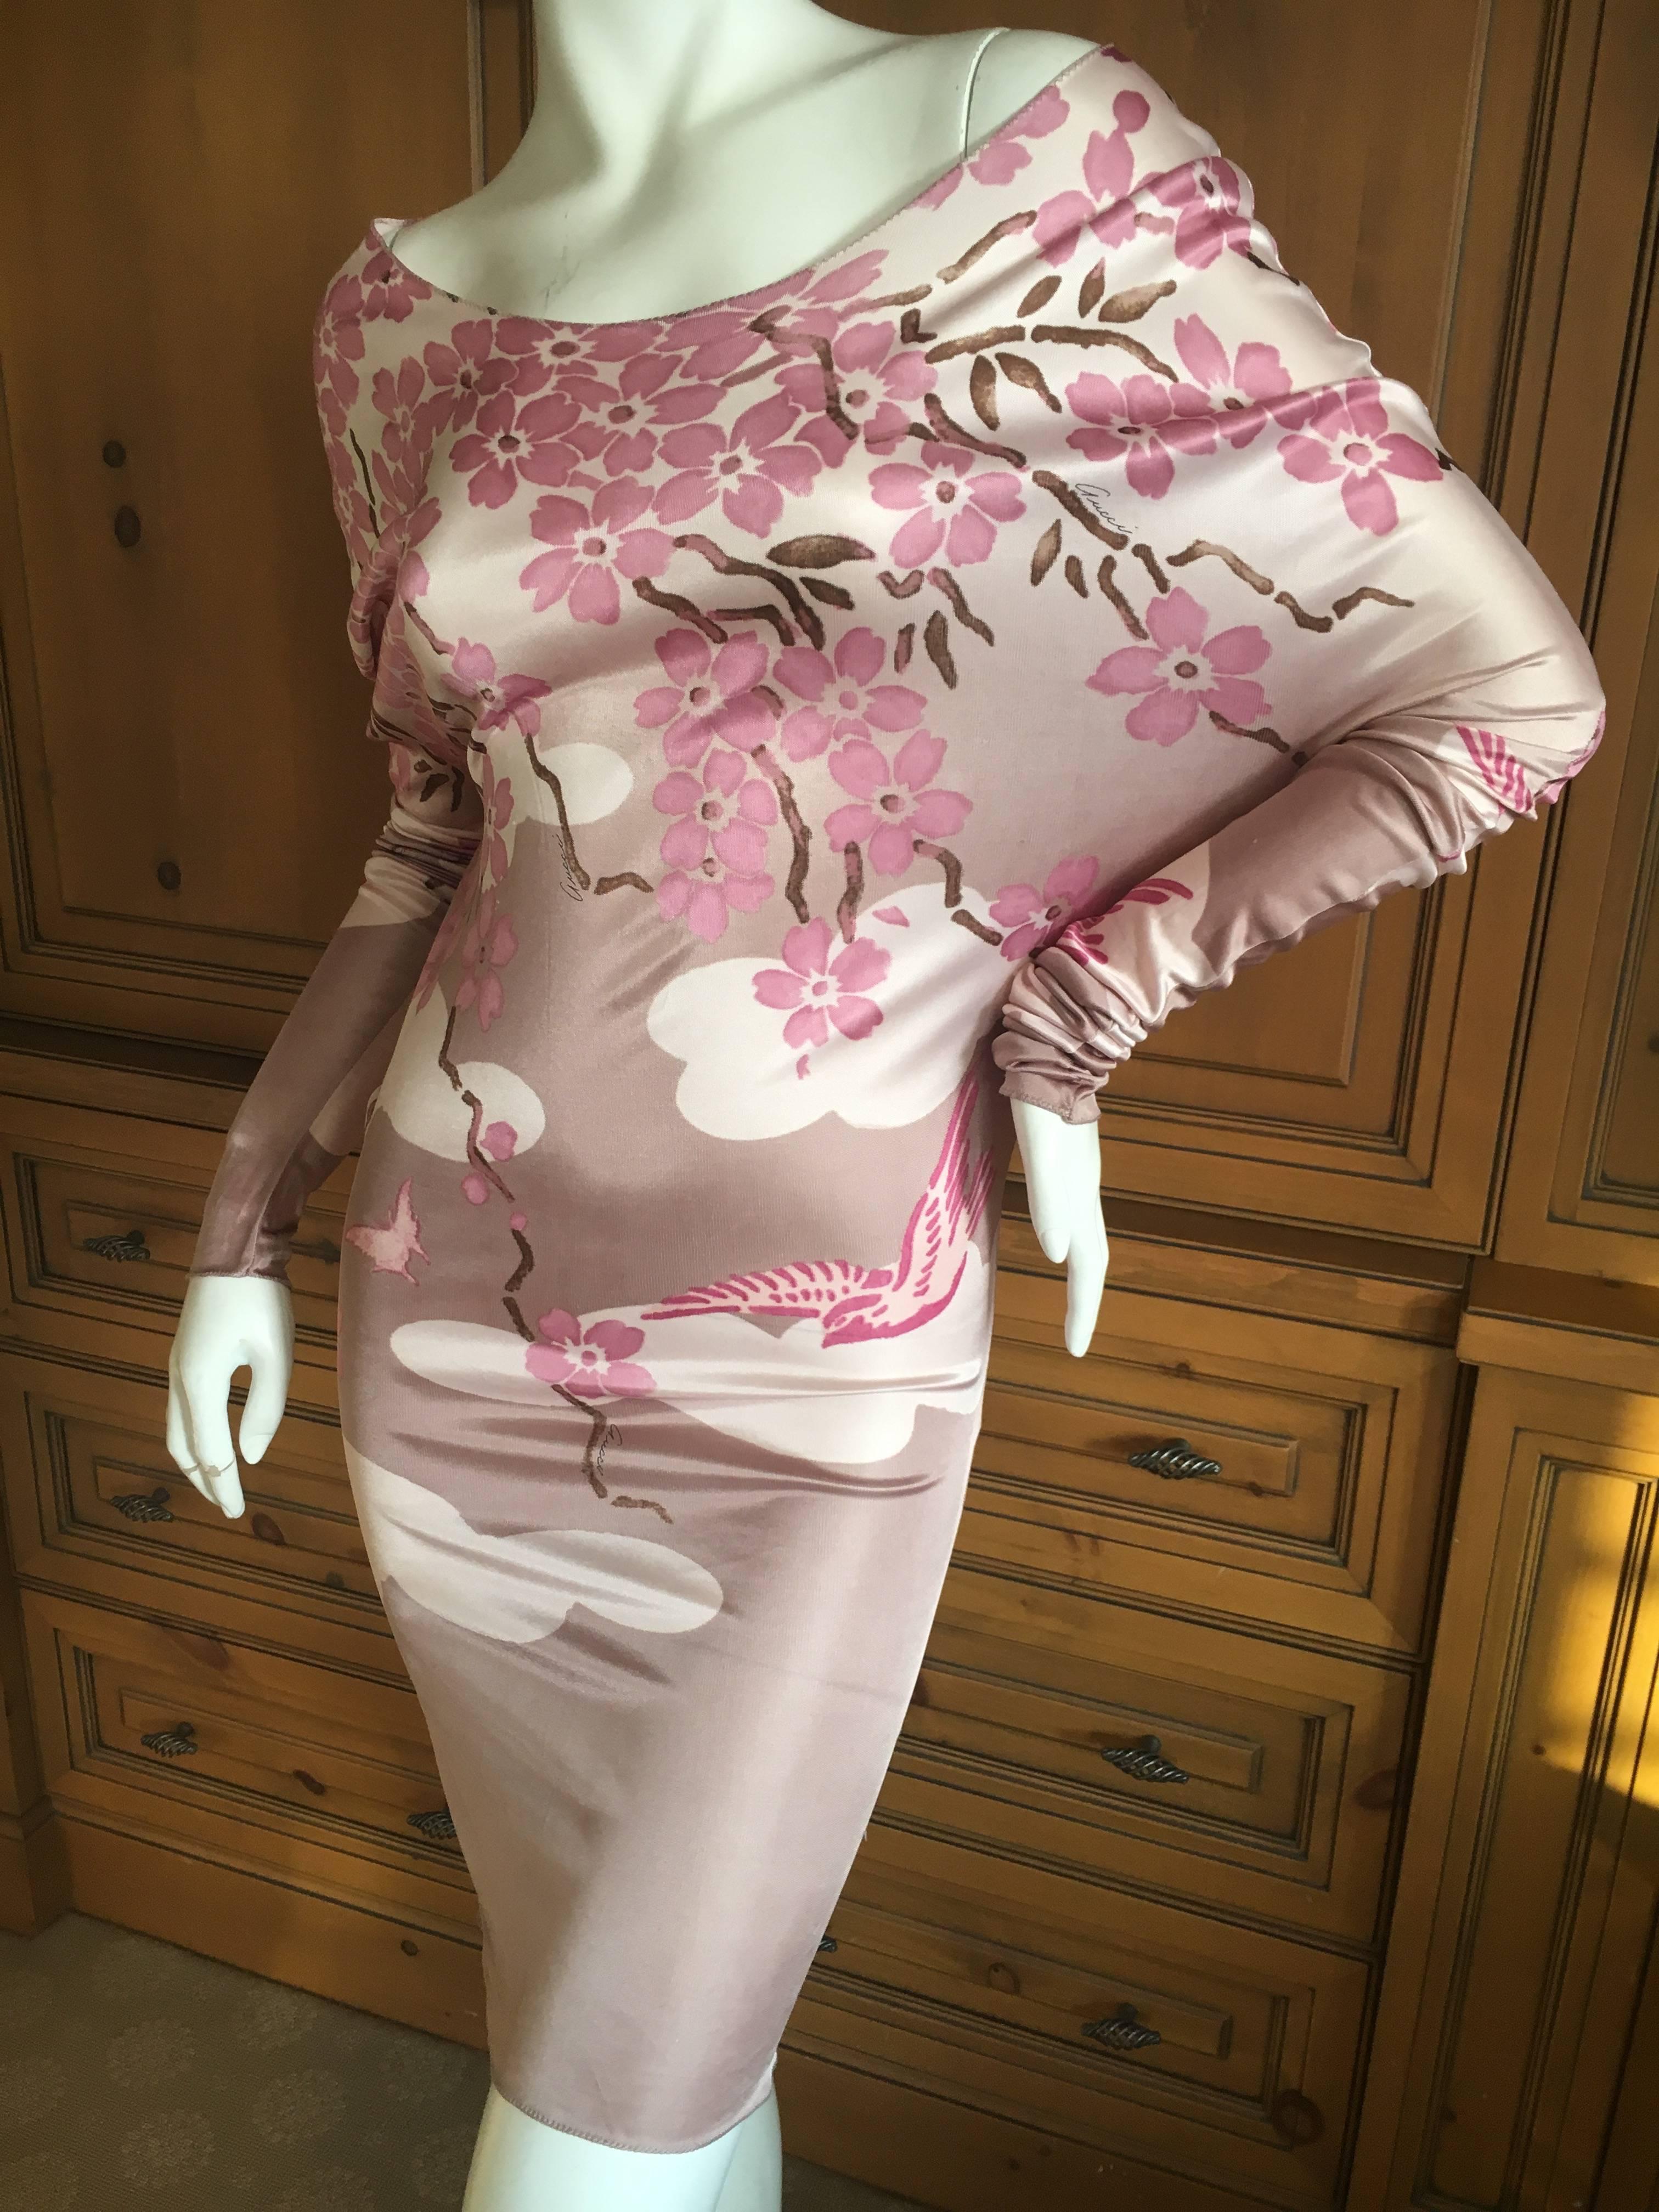 Gucci 2003 Tom Ford Japonaise Dogwood Blossom Long Sleeve Mini Dress.
Size M
BUst 38"
Waist 34"
Hips 42"
Length 46"
Slight snags